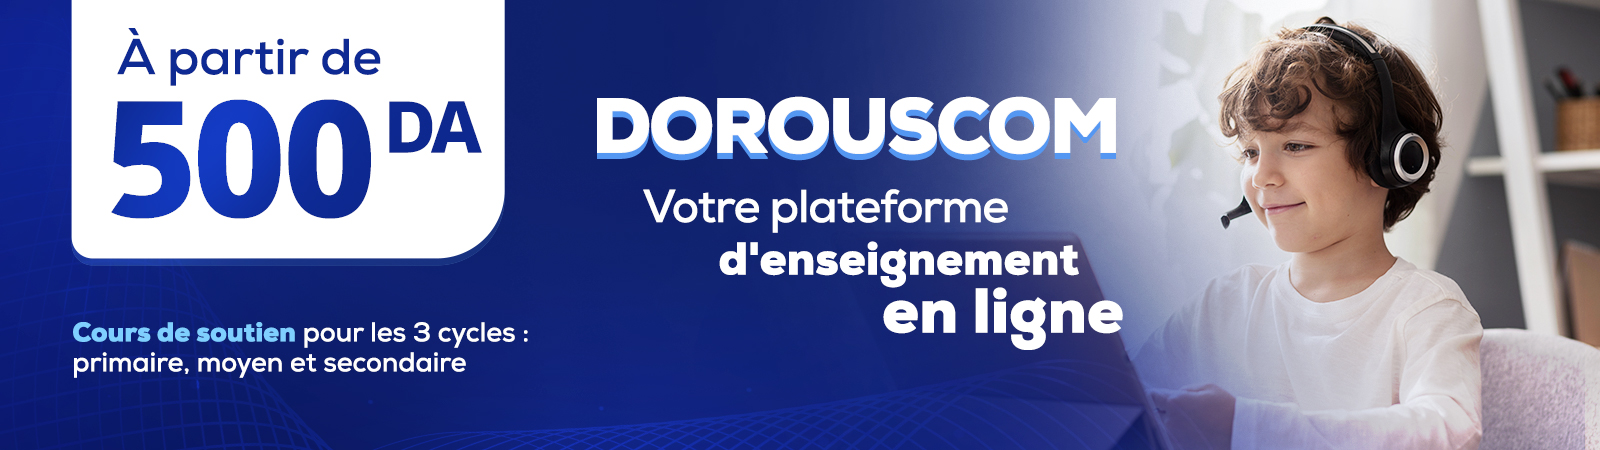 Dorouscom